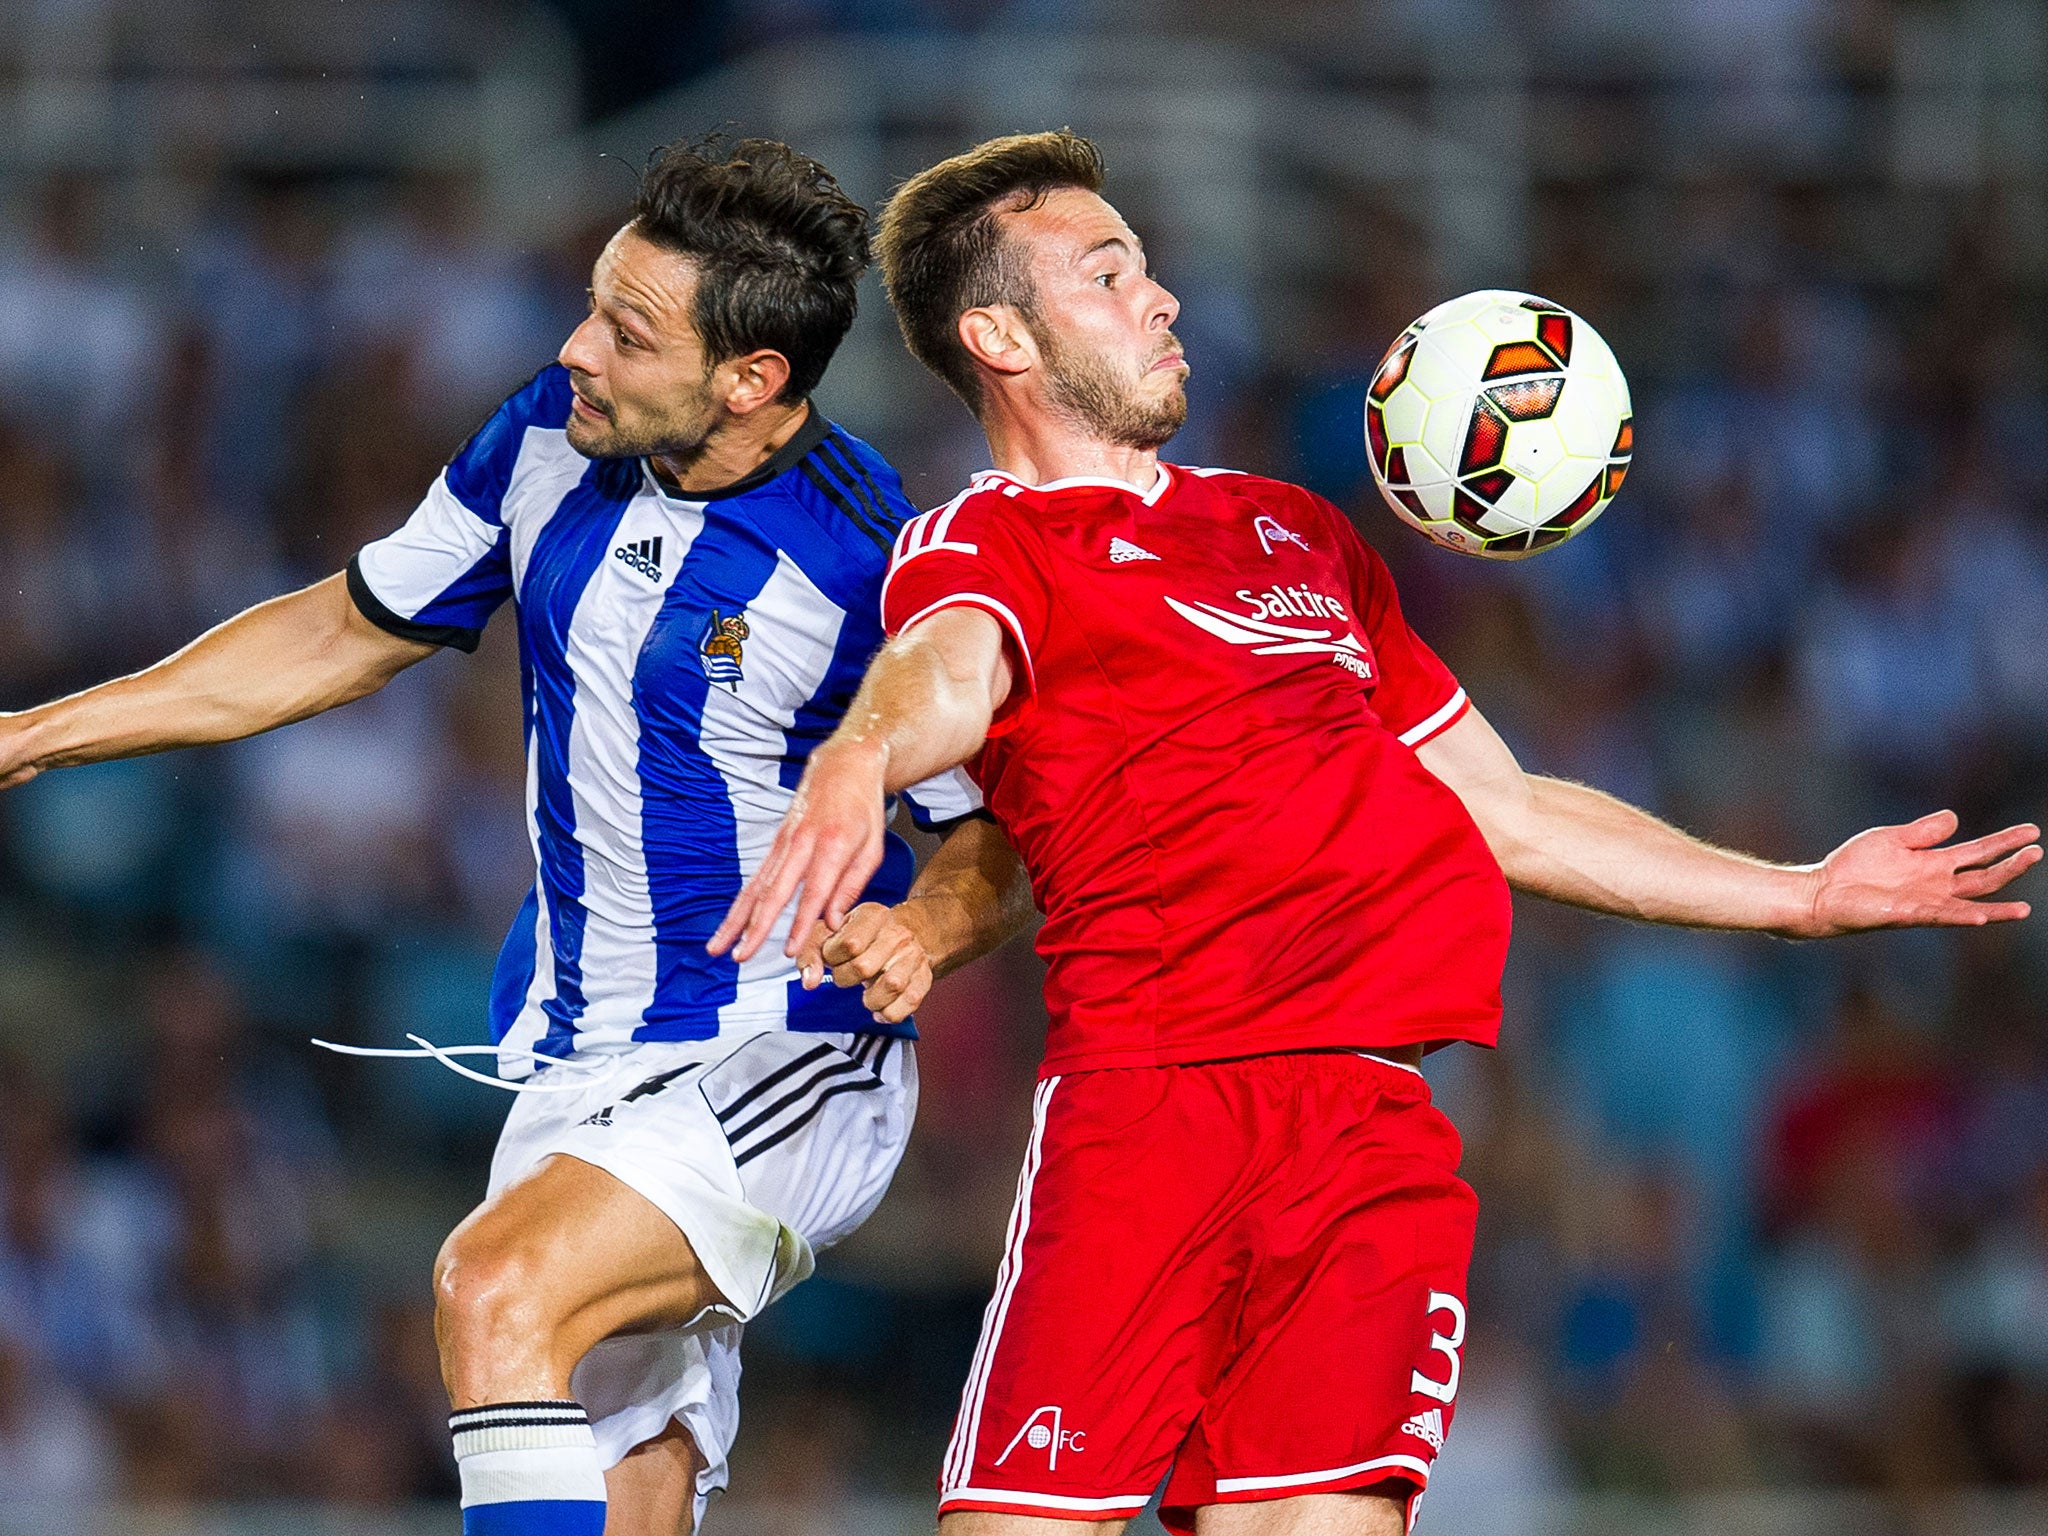 Andrew Considine of Aberdeen CF duels for the ball with Alberto de la Bella of Real Sociedad